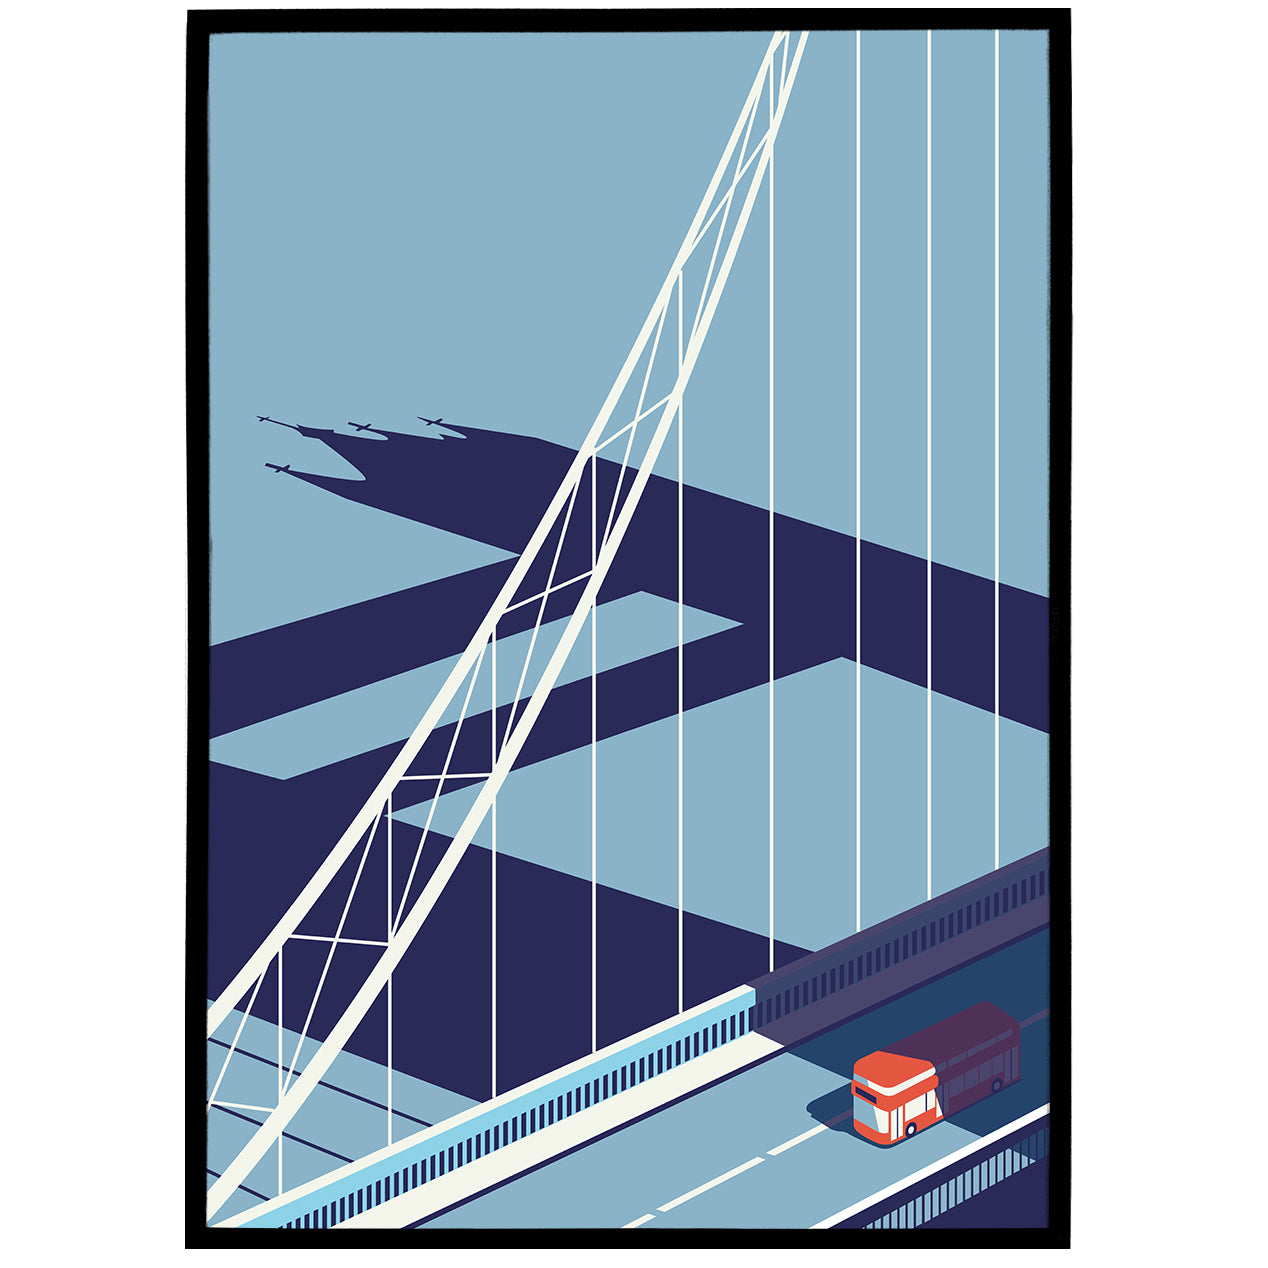 London Tower Bridge Poster